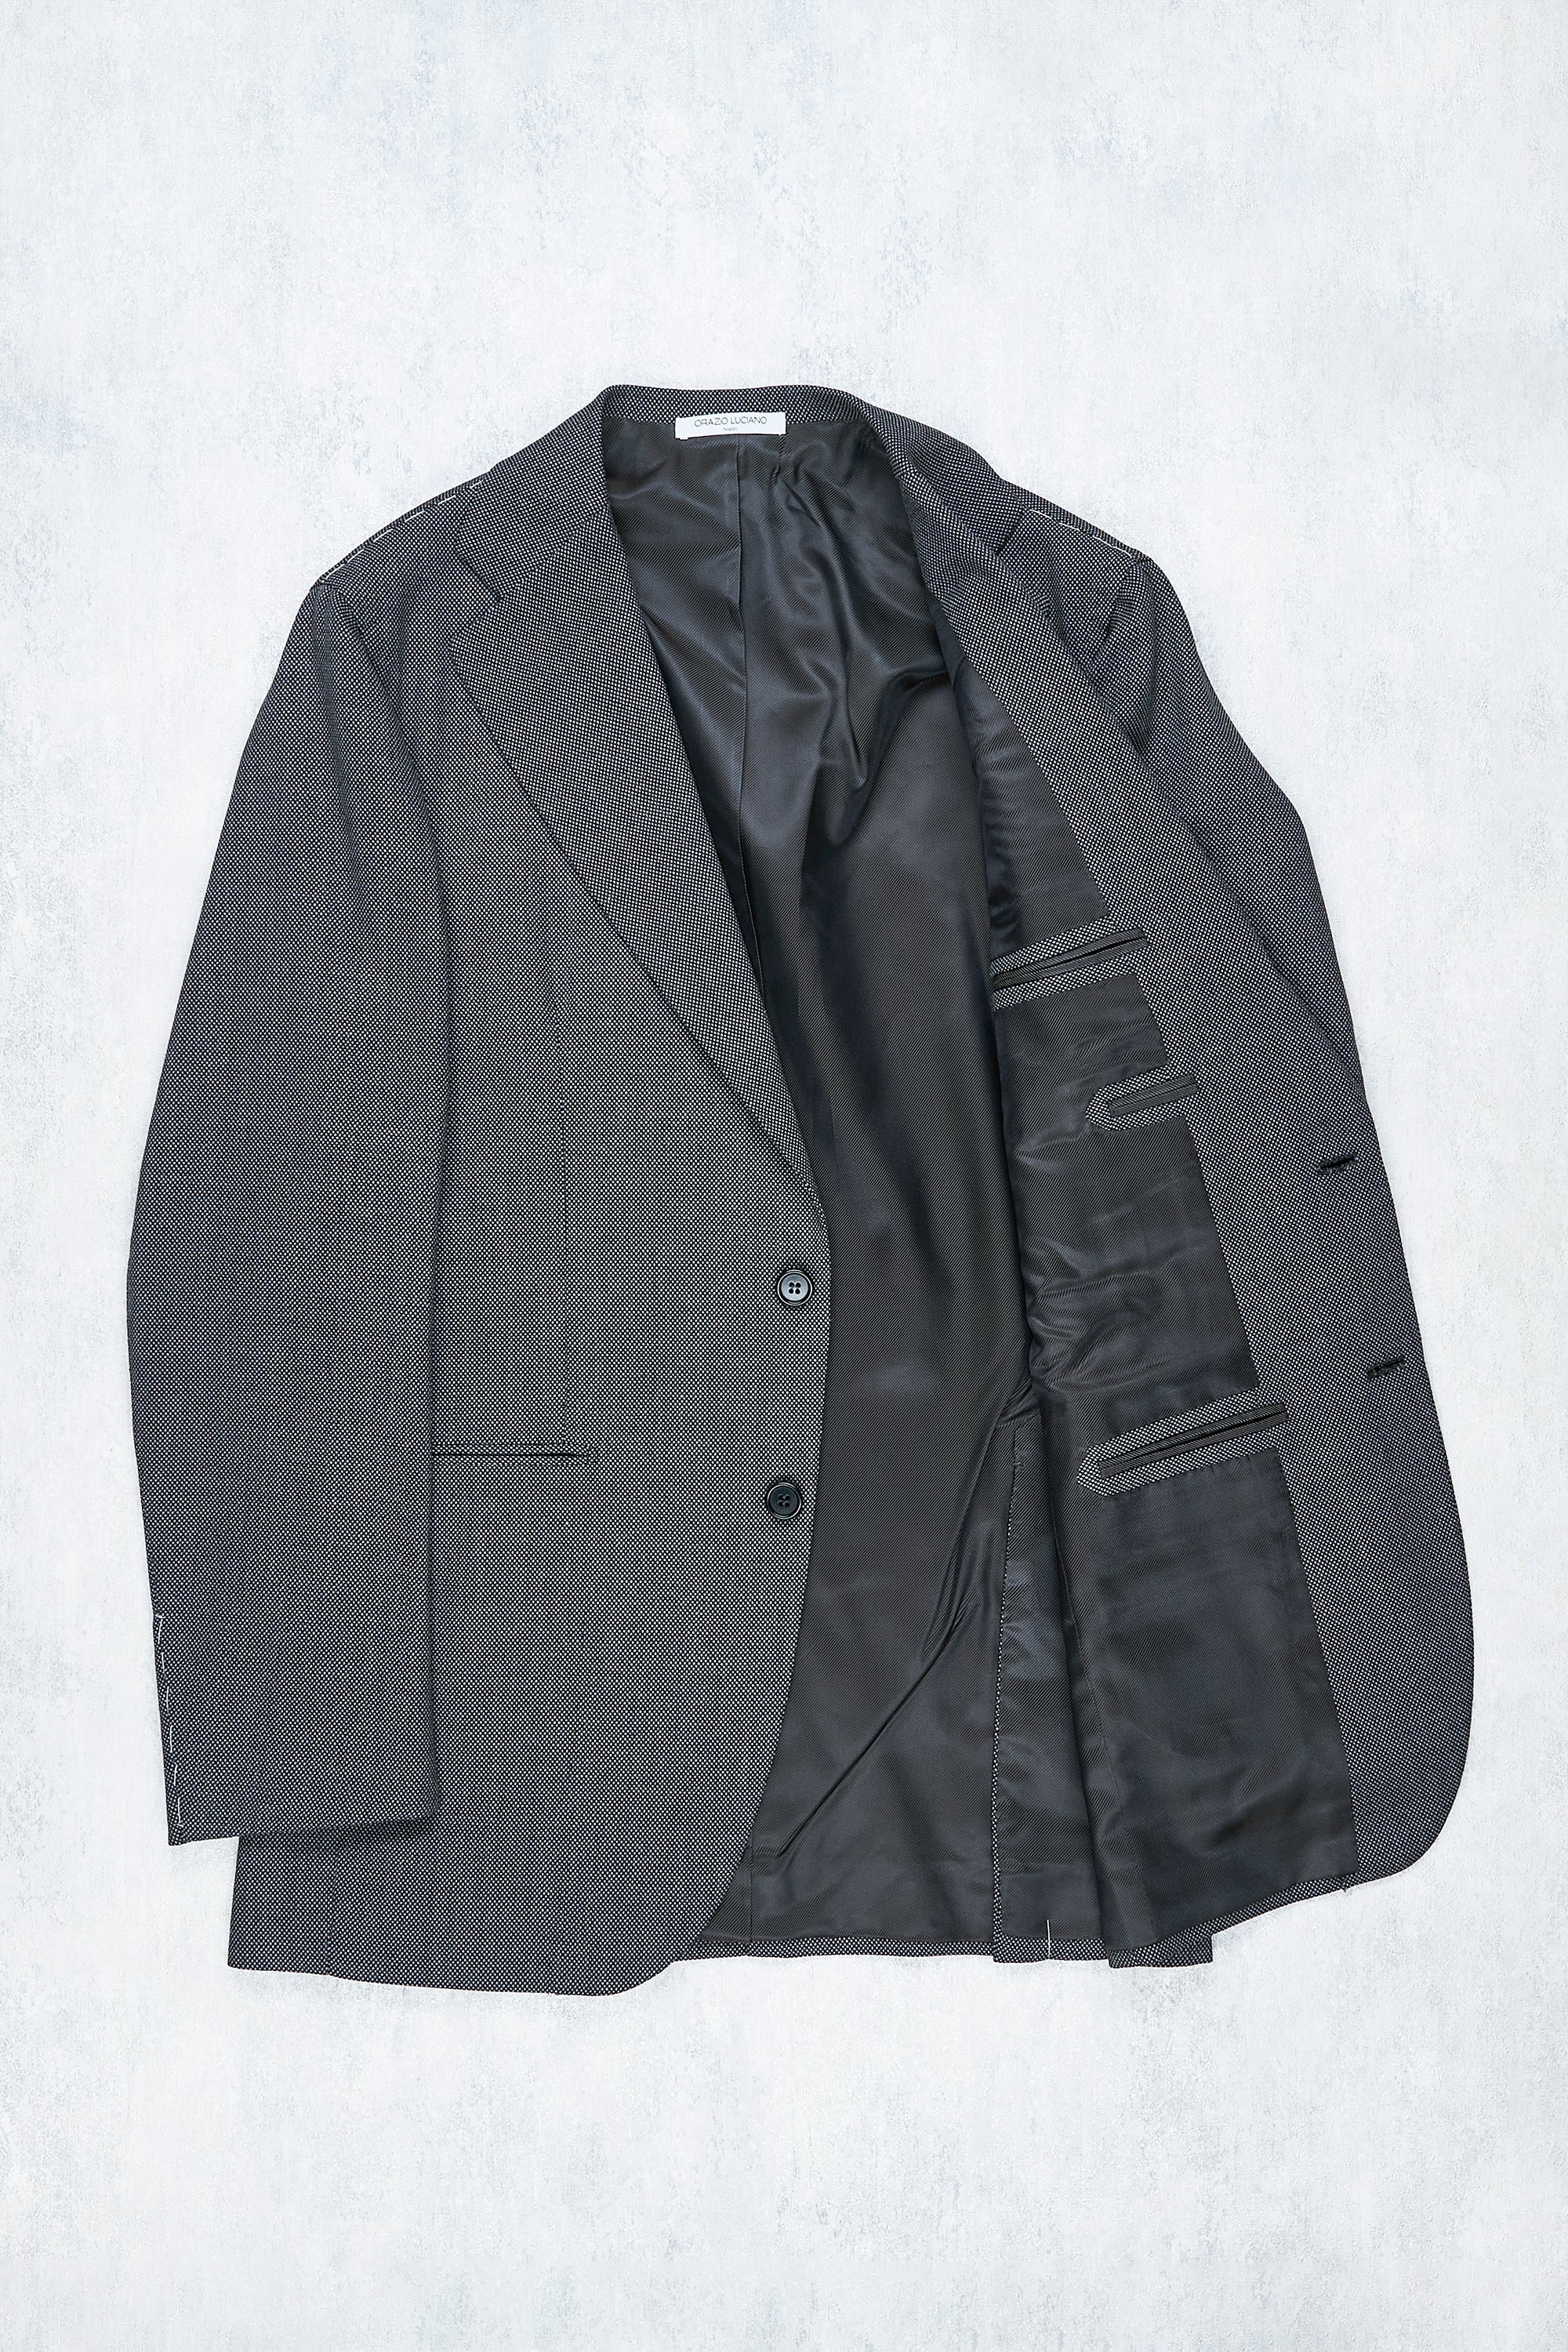 Orazio Luciano Grey Wool Birdseye Suit